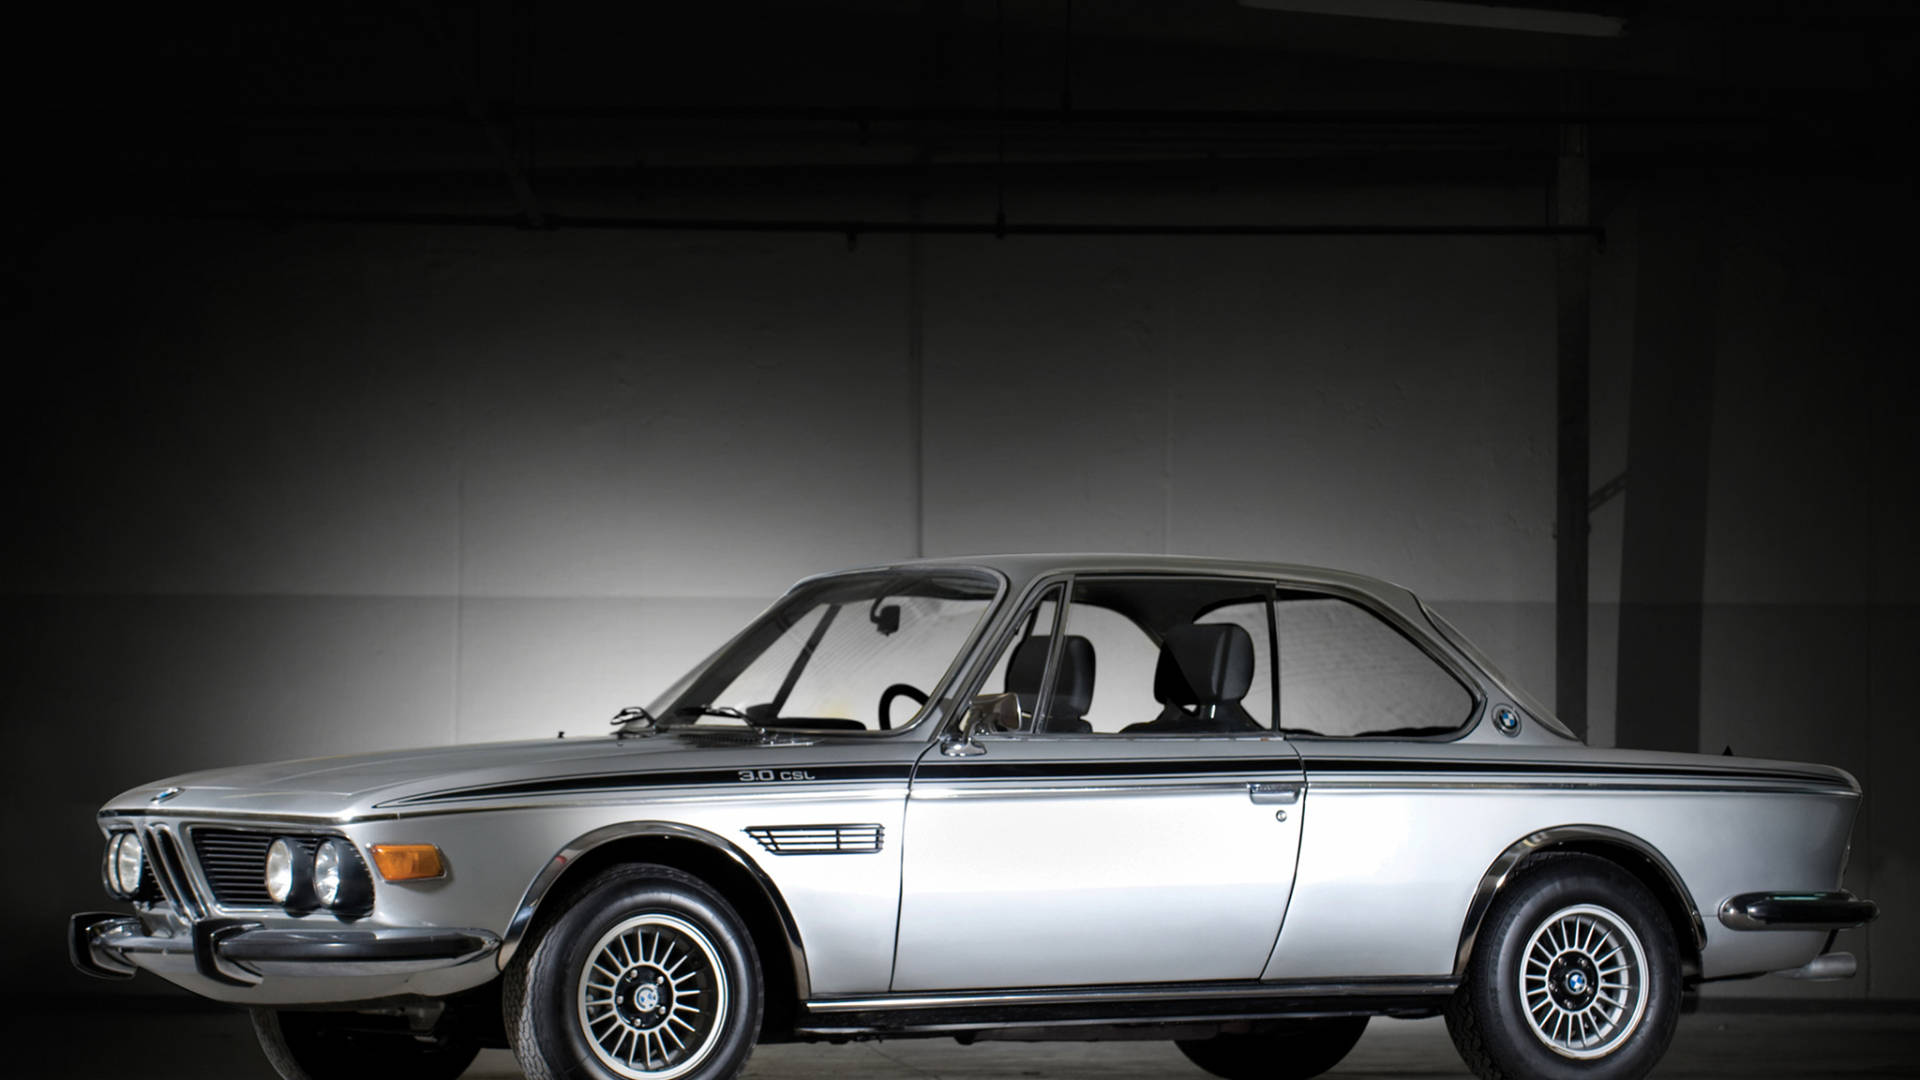 Metallic White Classic BMW Wallpaper